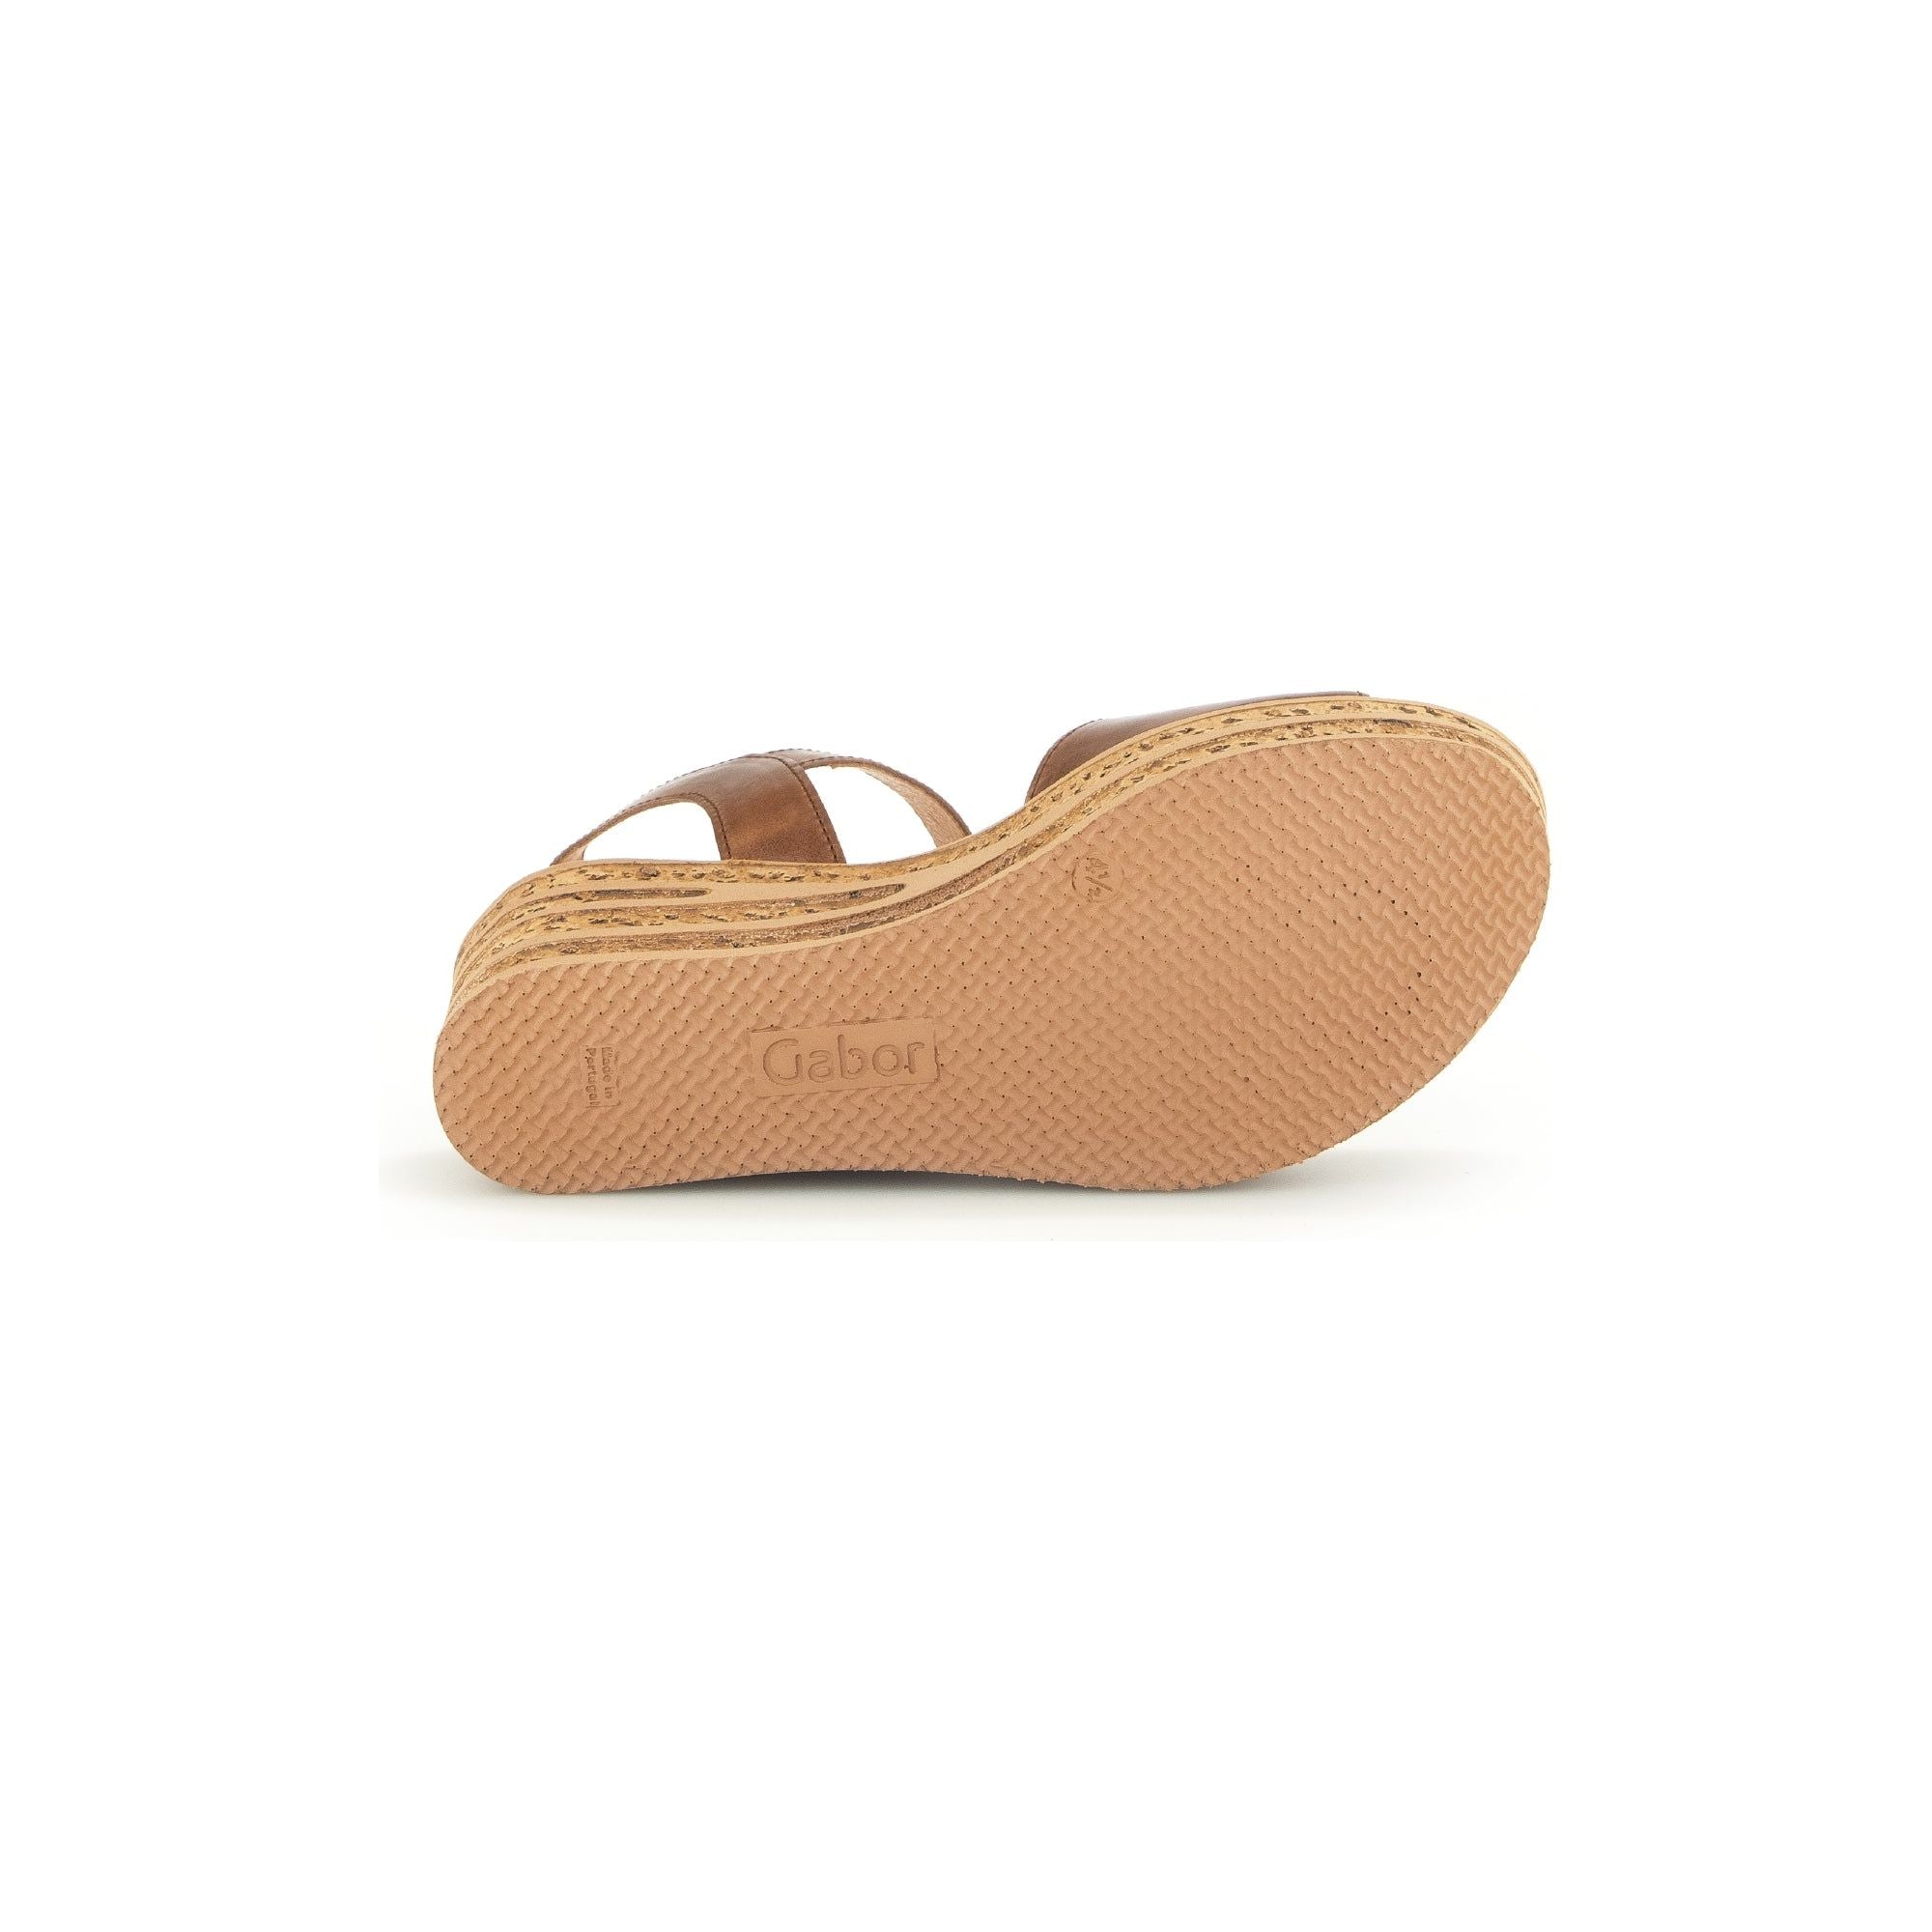 Gabor Twirl (44.651.24)- Ladies Wedge Sandal in Tan Leather .Gabor Shoes | Wisemans | Bantry | Shoe Shop | West Cork | Ireland